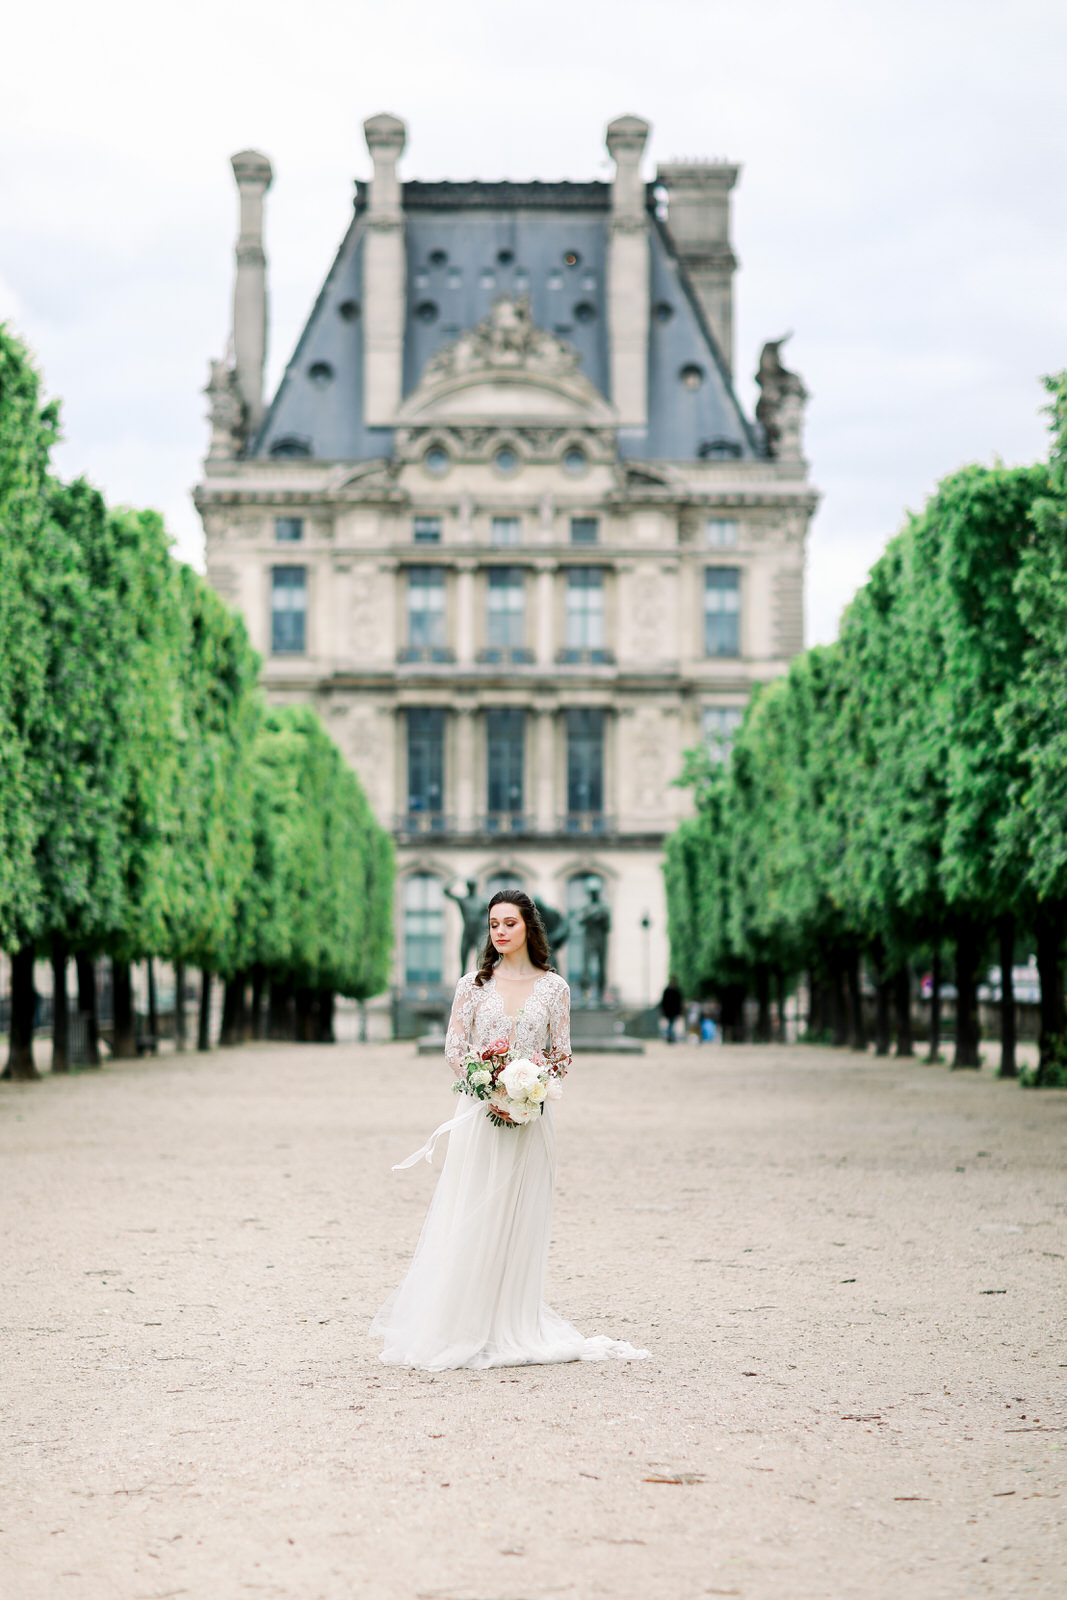 A destination wedding photographer based in North Carolina photographs a classic French bride at a Paris wedding.